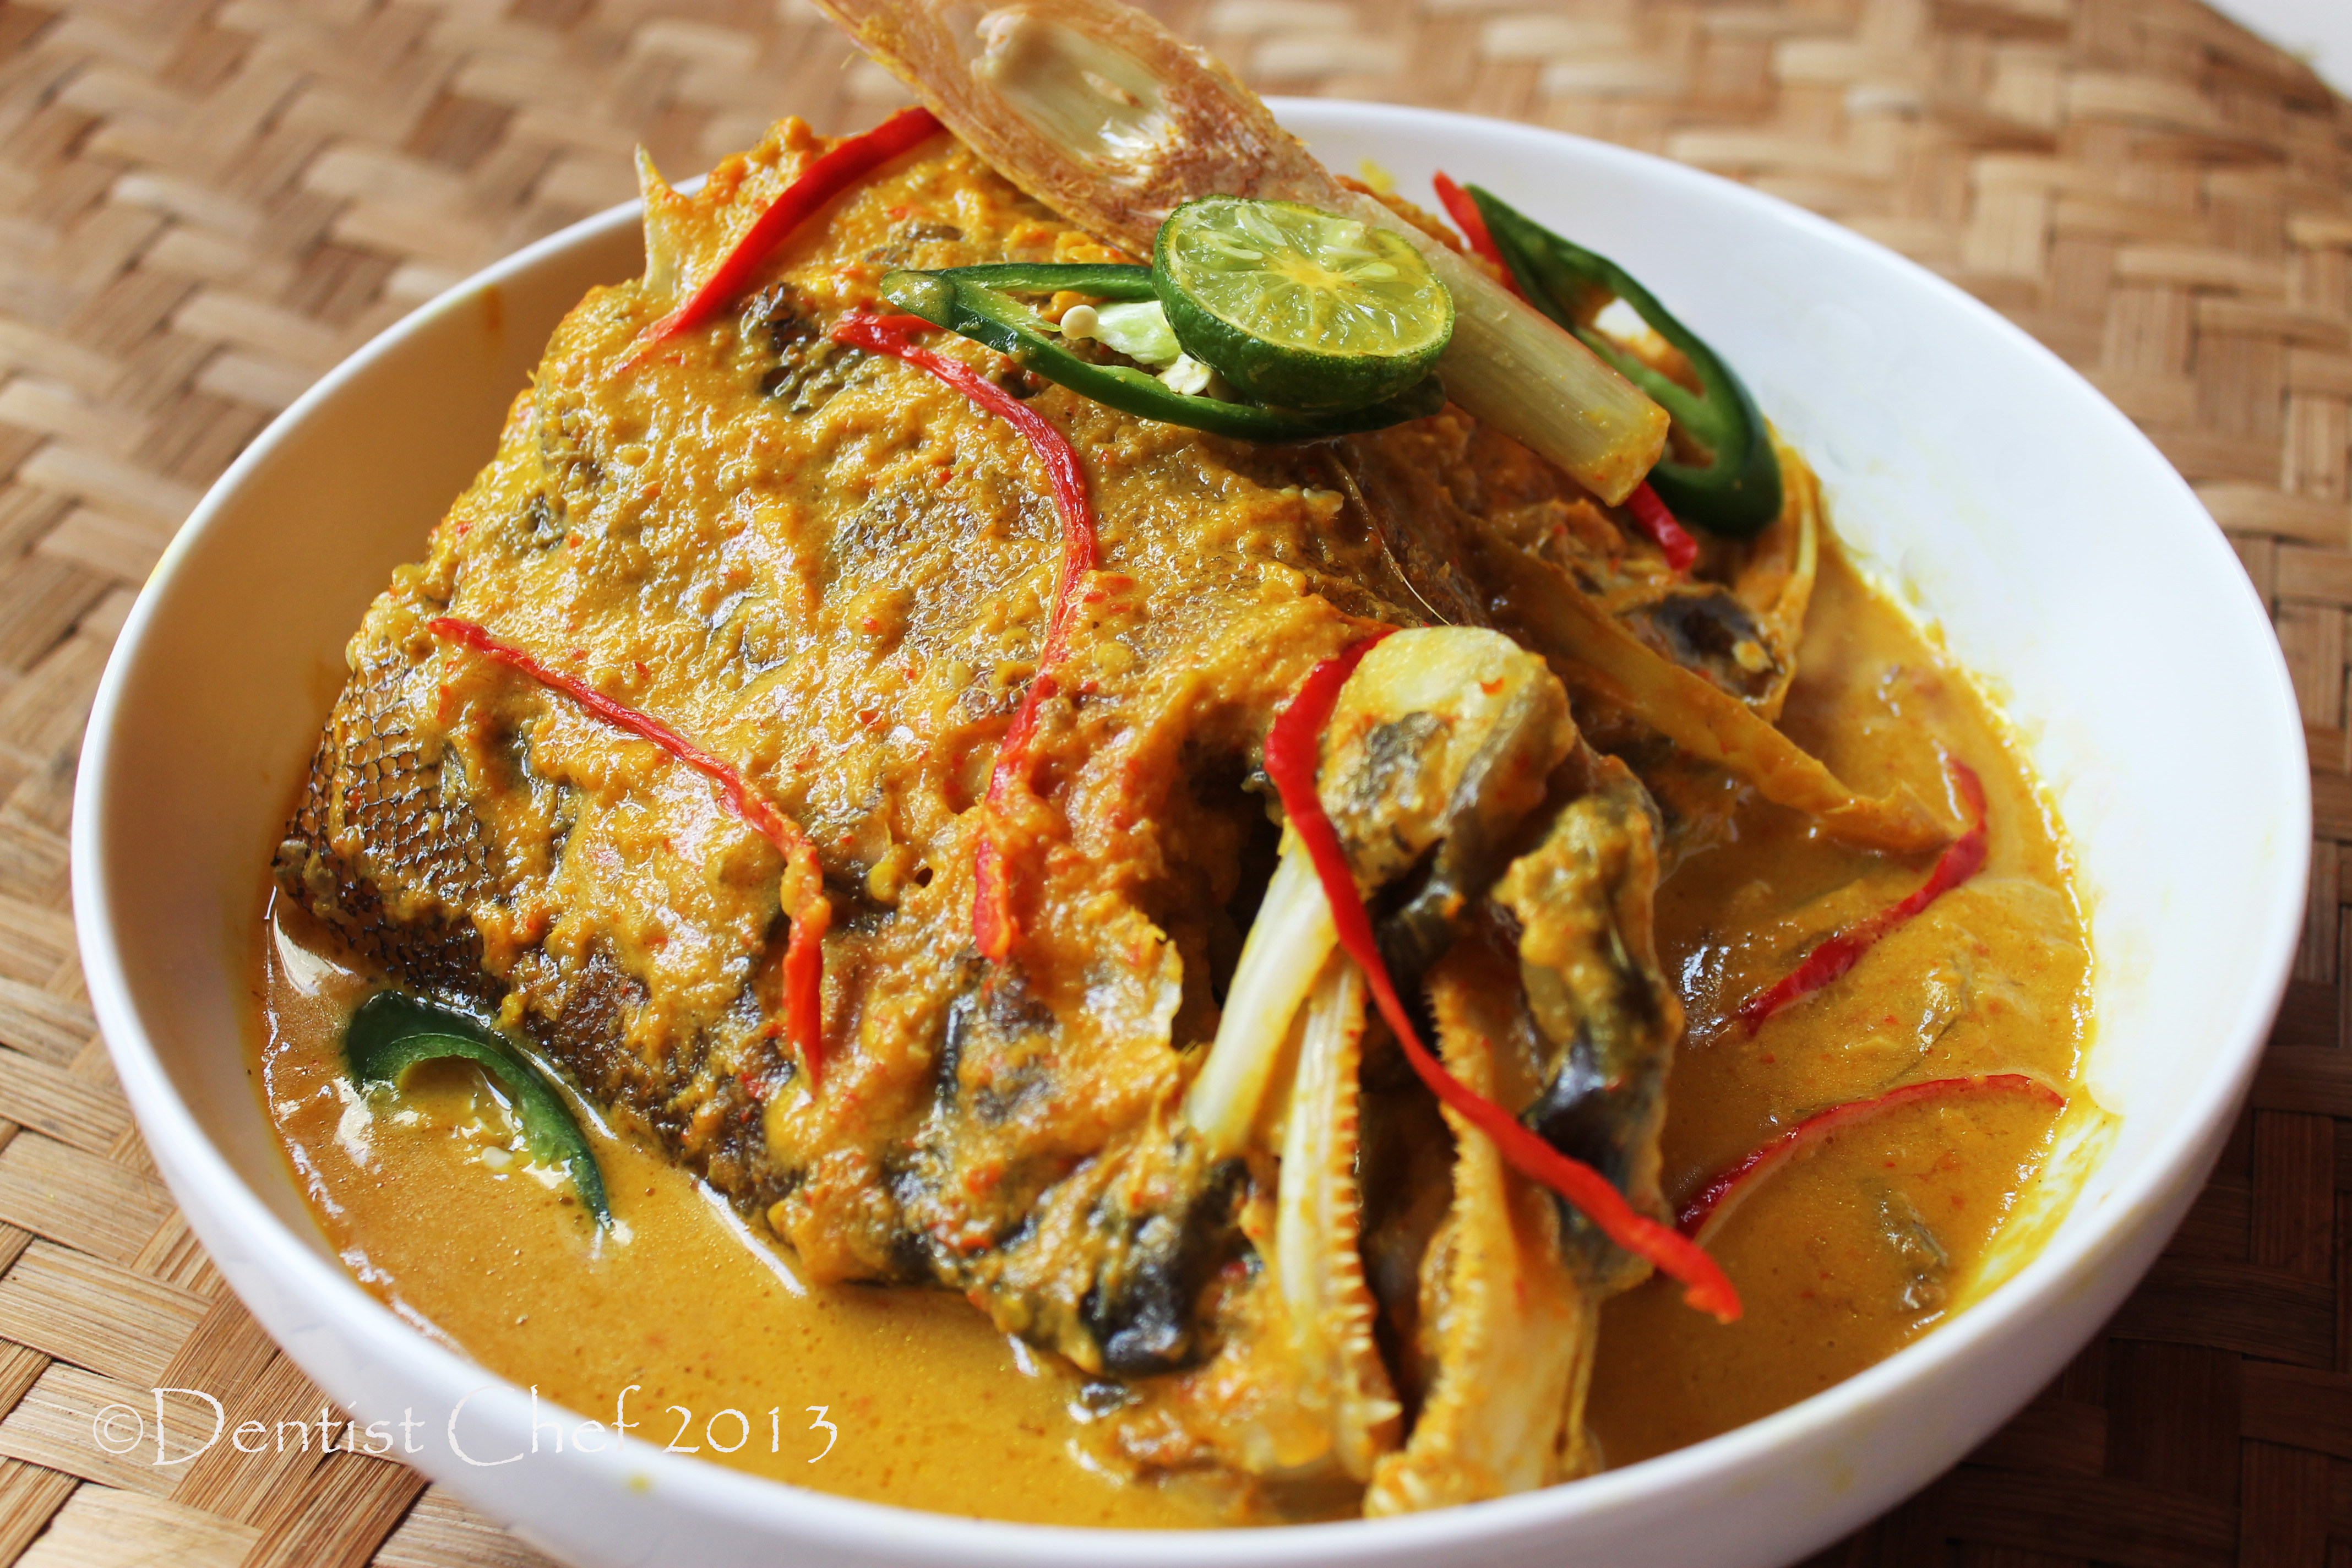  Resep  Woku  Ikan Belanga Khas Manado  Manadonese Spicy Fish 